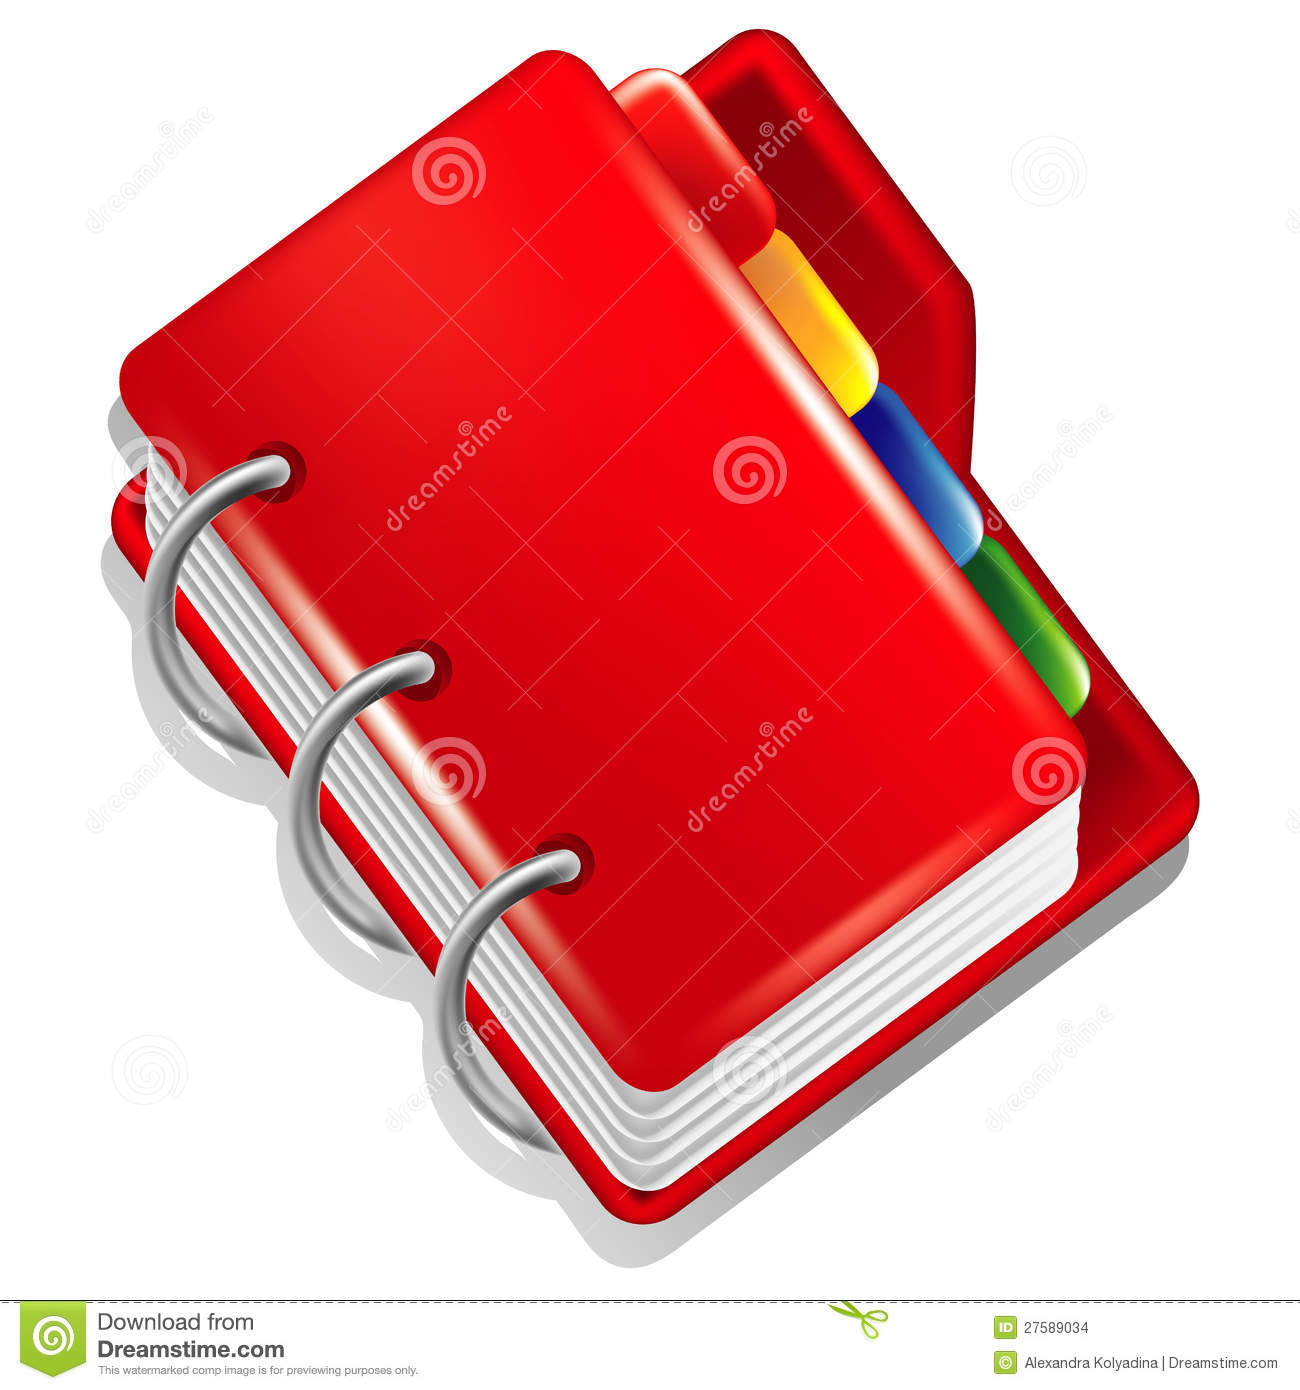 Red Folder Icon